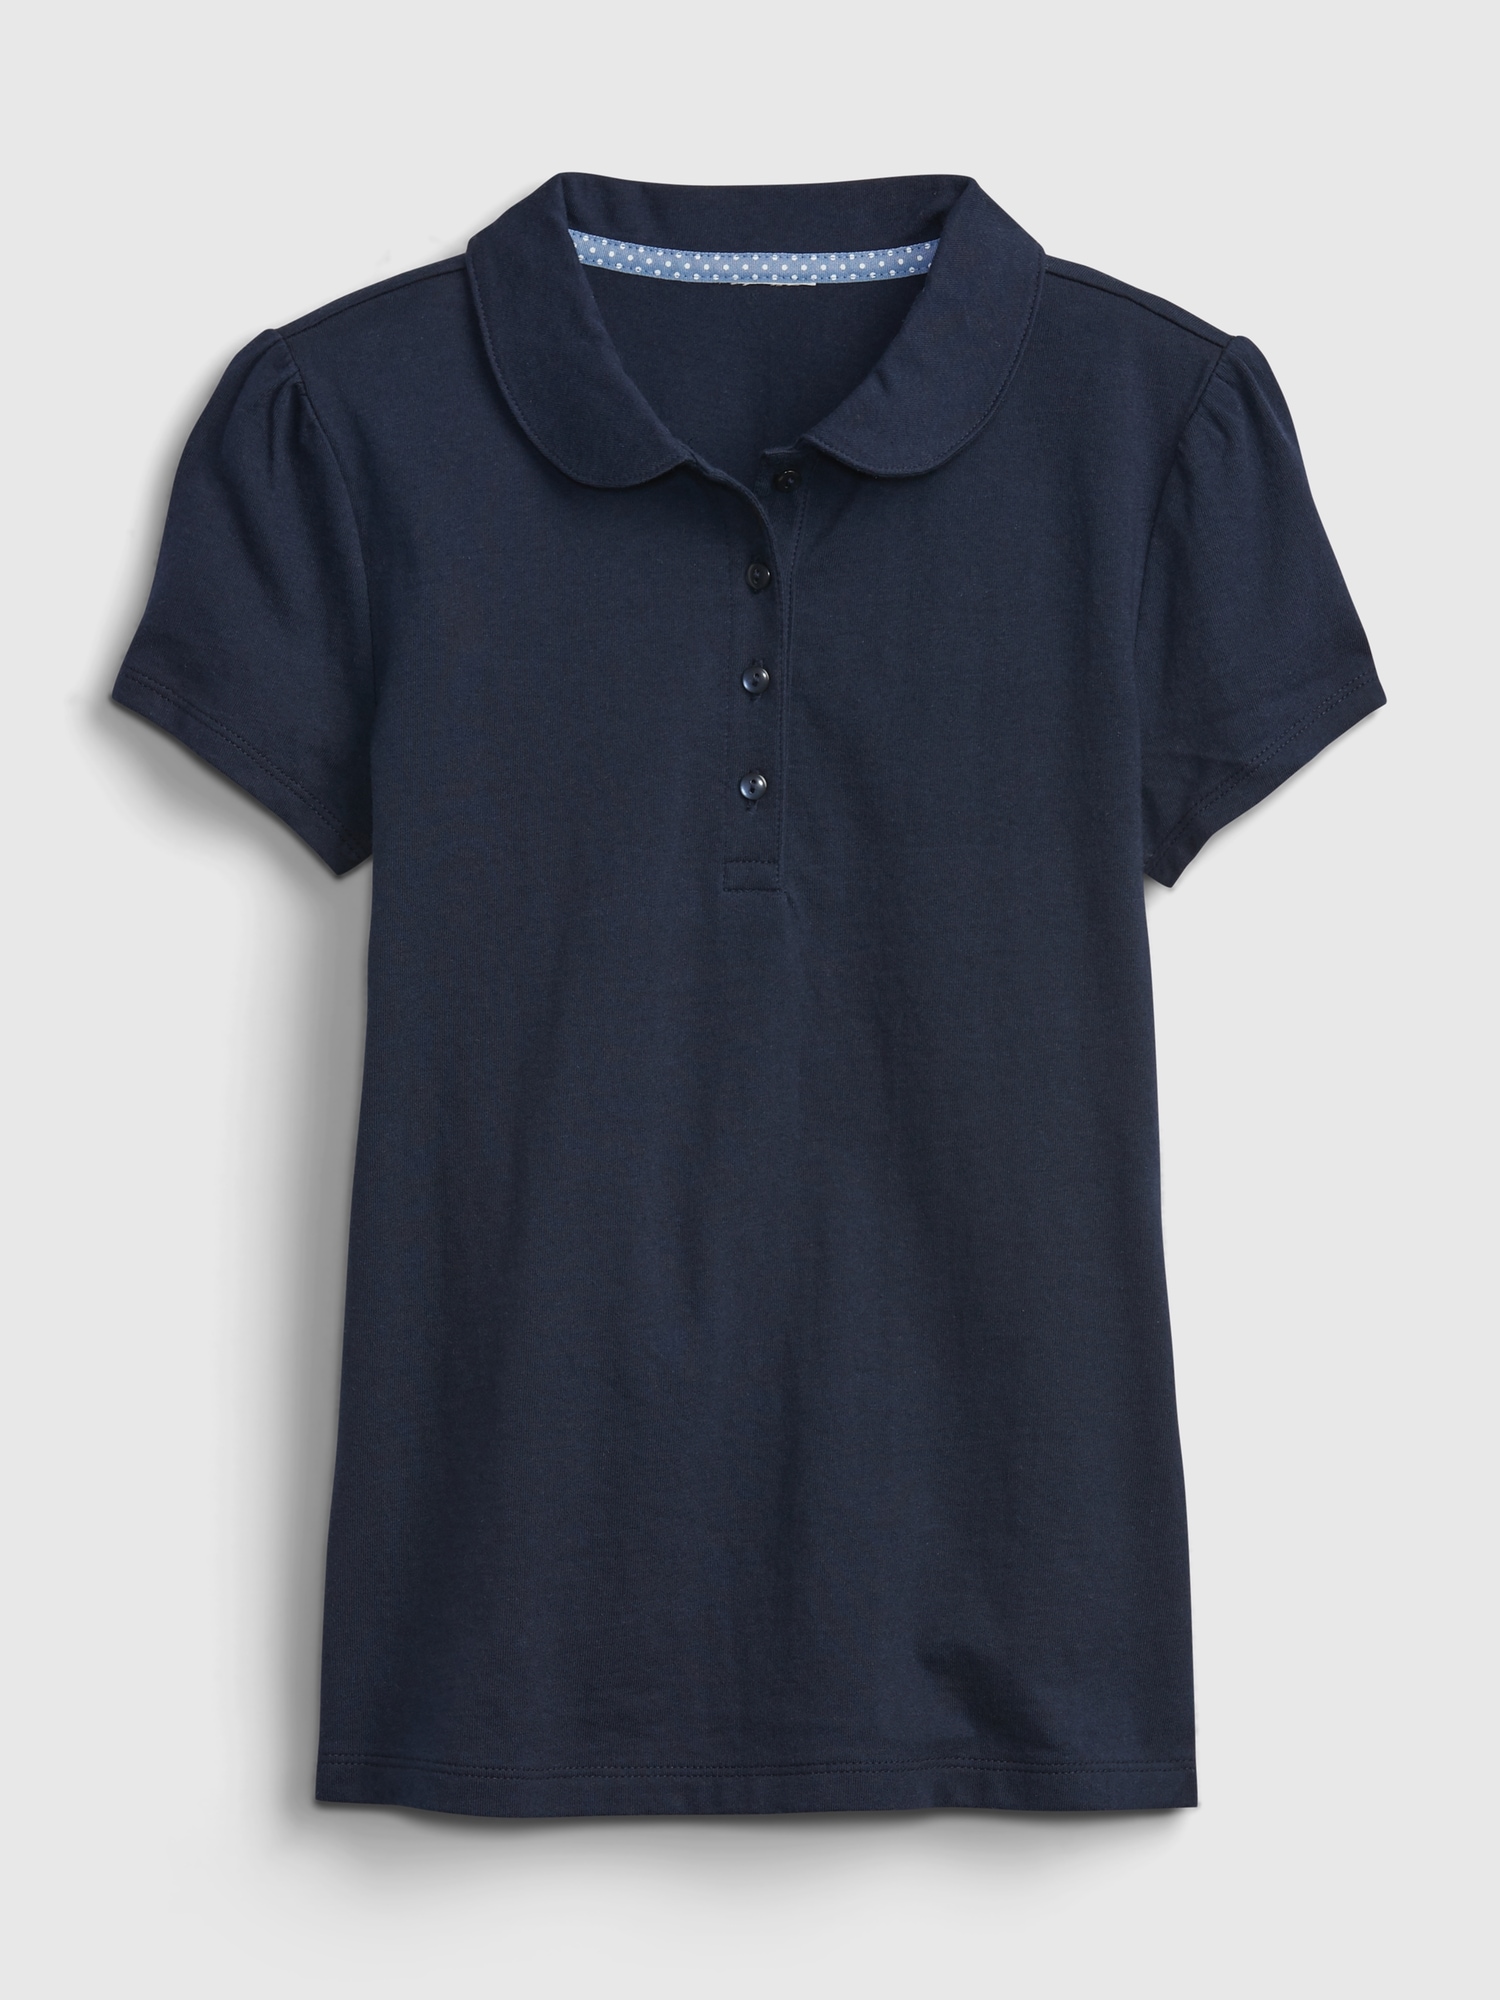 Gap Kids 100% Organic Cotton Uniform Polo Shirt blue. 1